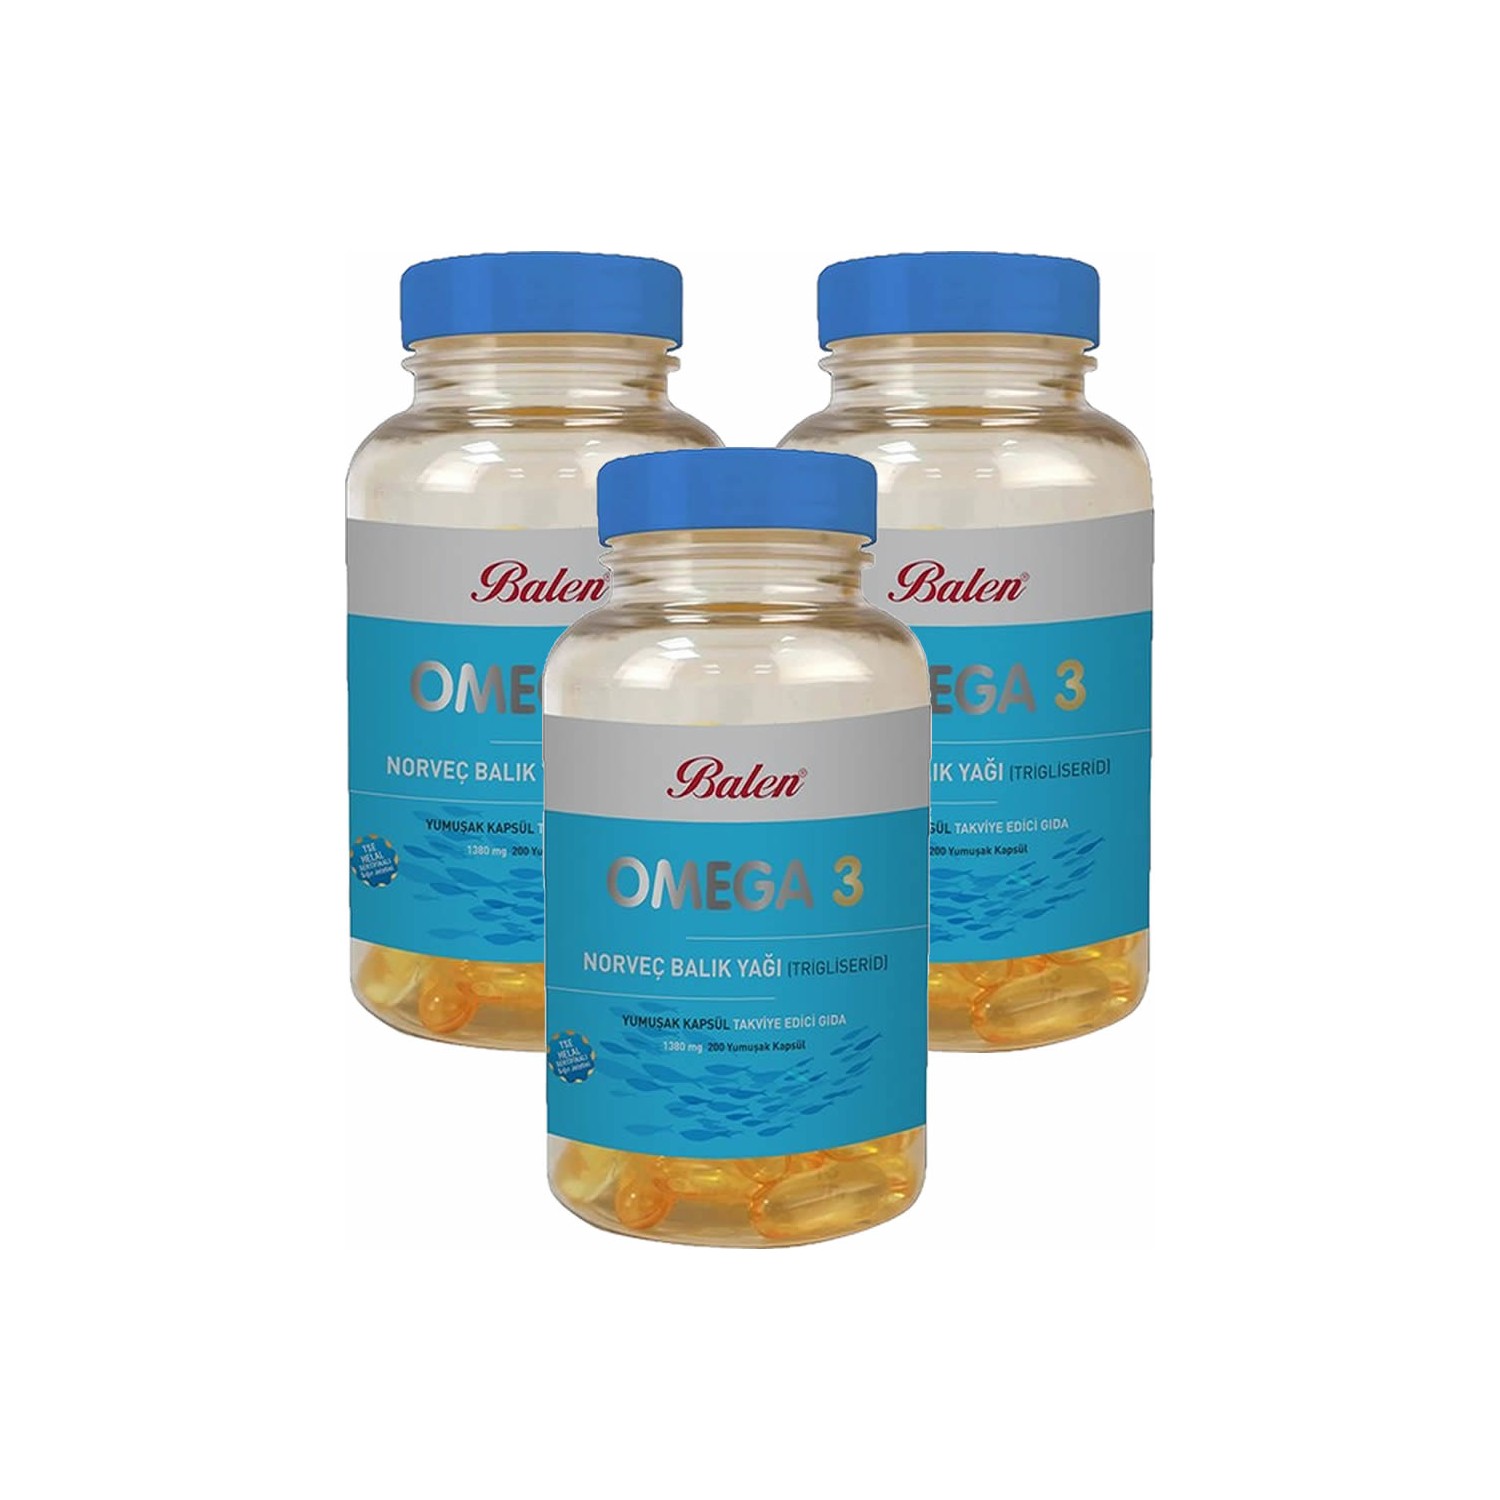 норвежский рыбий жир balen omega 3 триглицерид 1380 мг 2 упаковки по 200 капсул Норвежский рыбий жир Balen Omega-3 (триглицерид) 1380 мг, 3 упаковки по 200 капсул